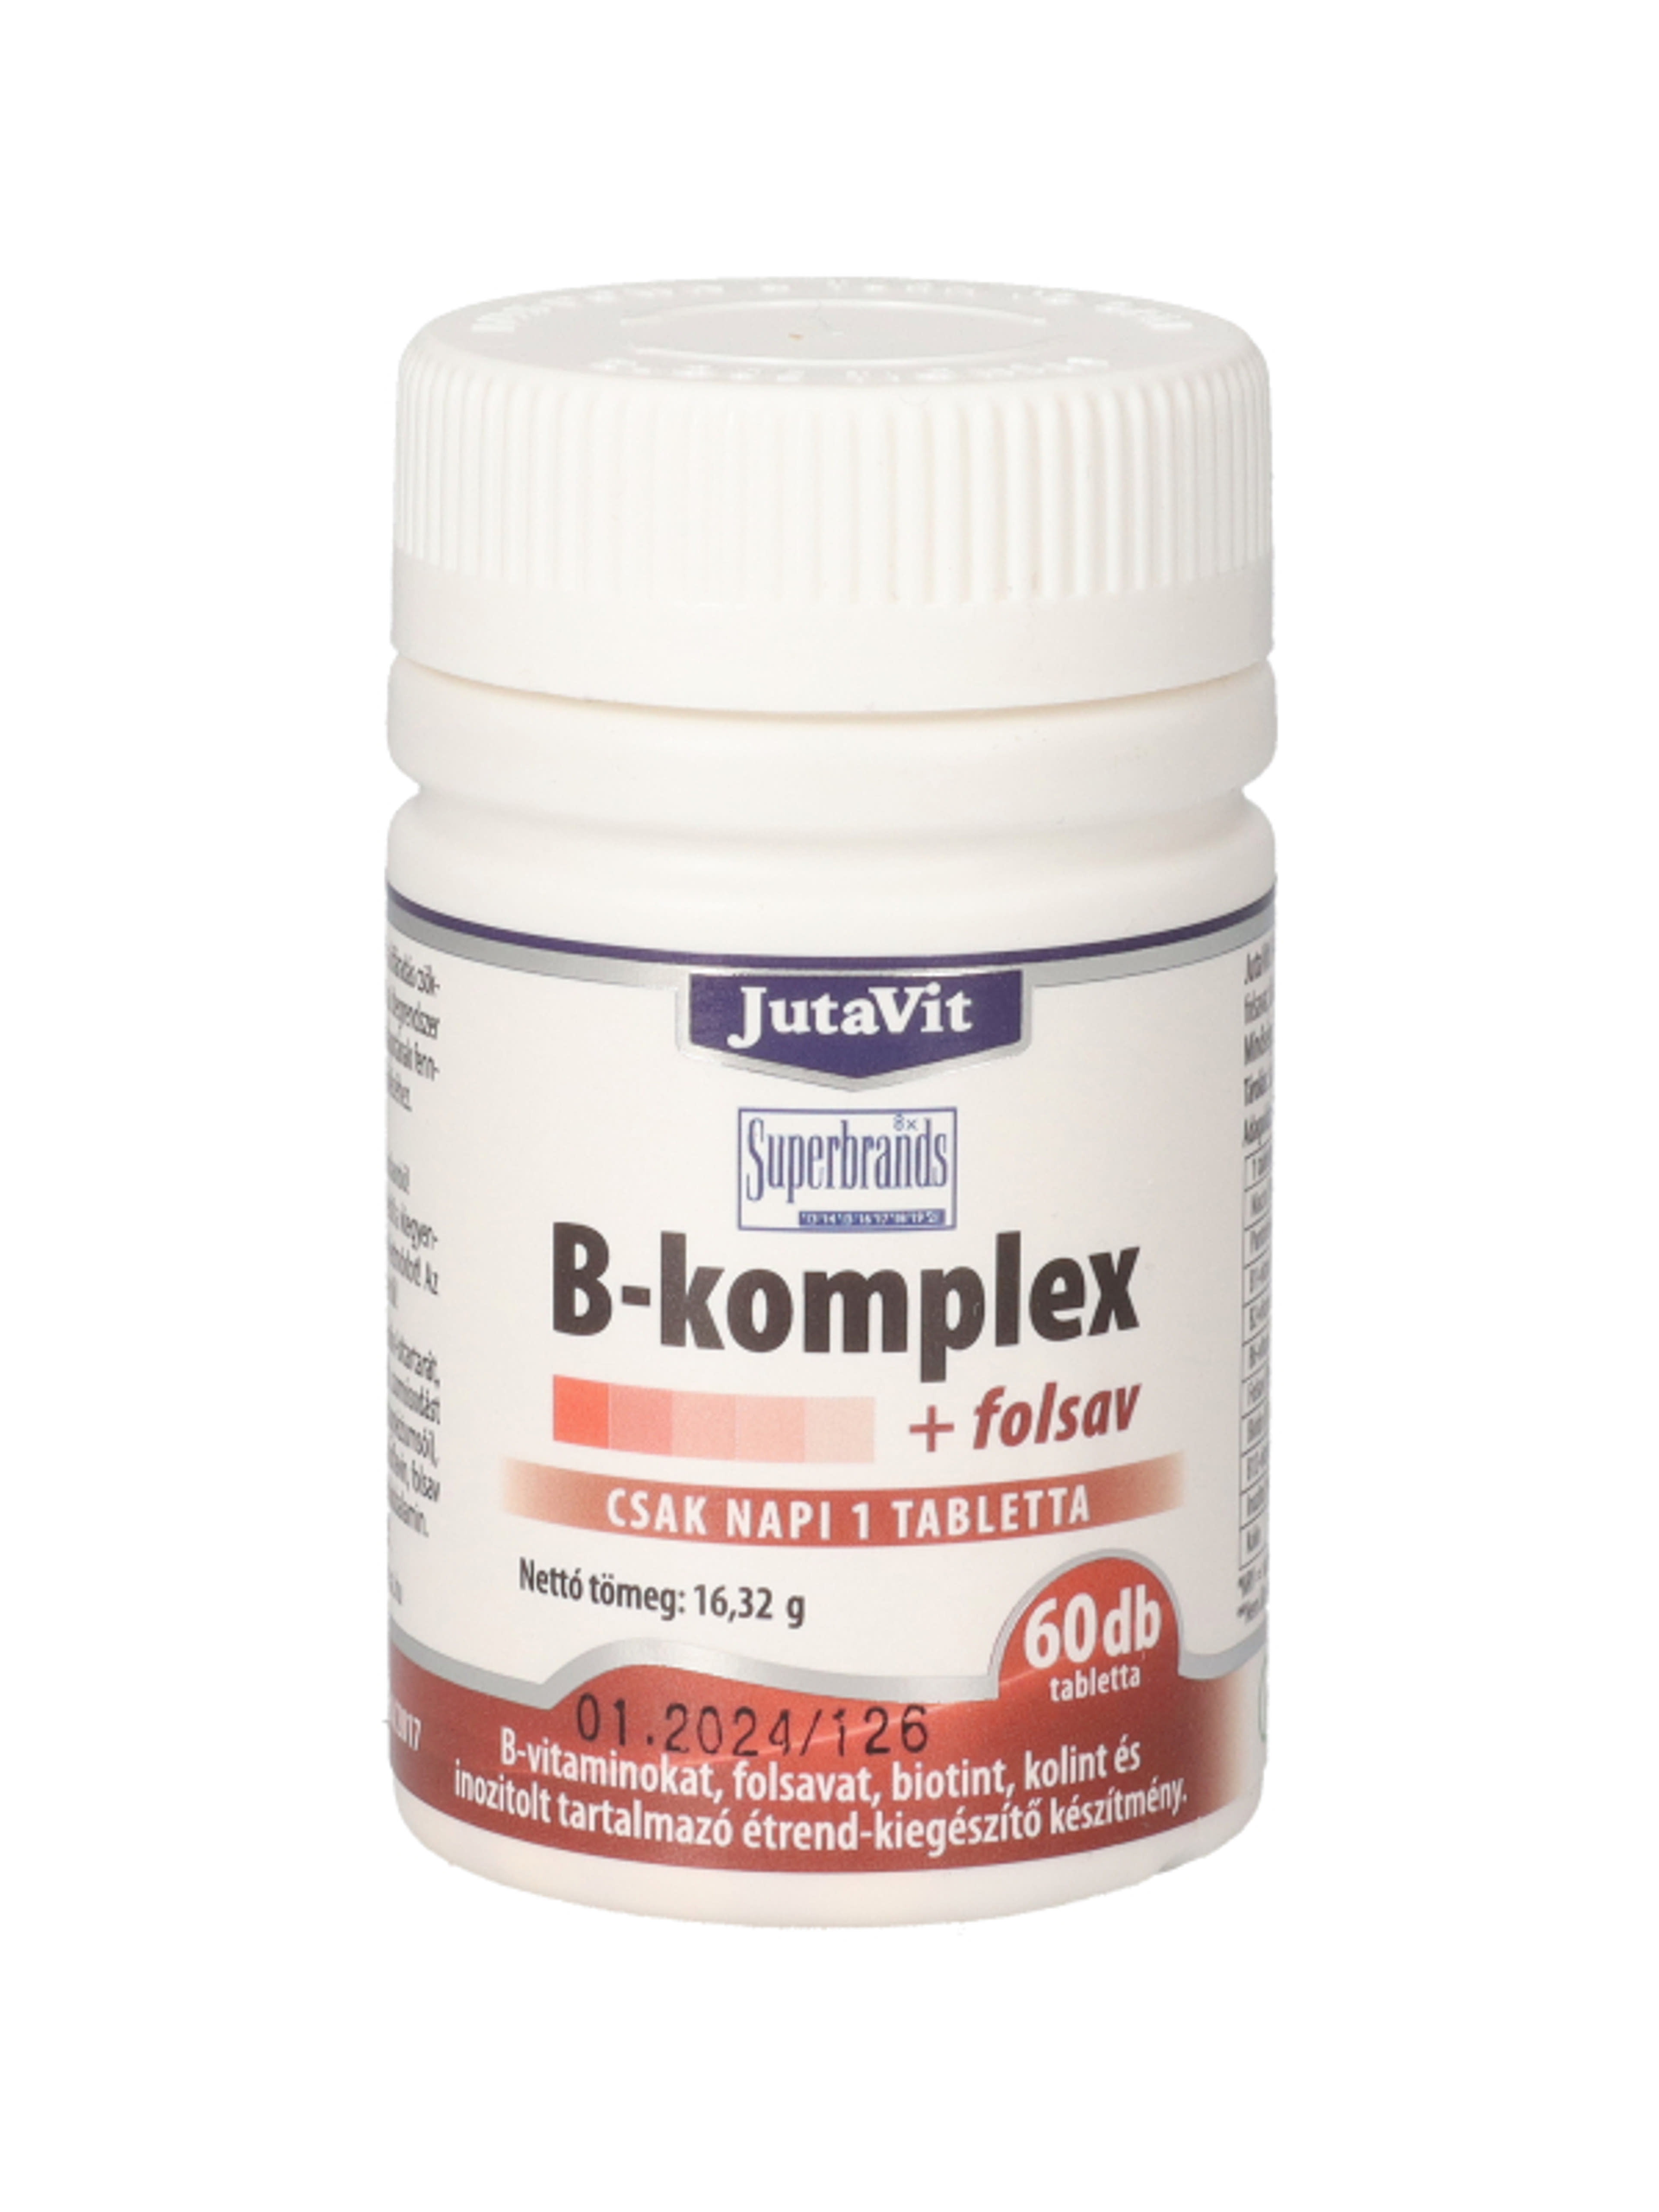 JutaVit B-komplex + folsav étrend-kiegészítő tabletta - 60 db-1